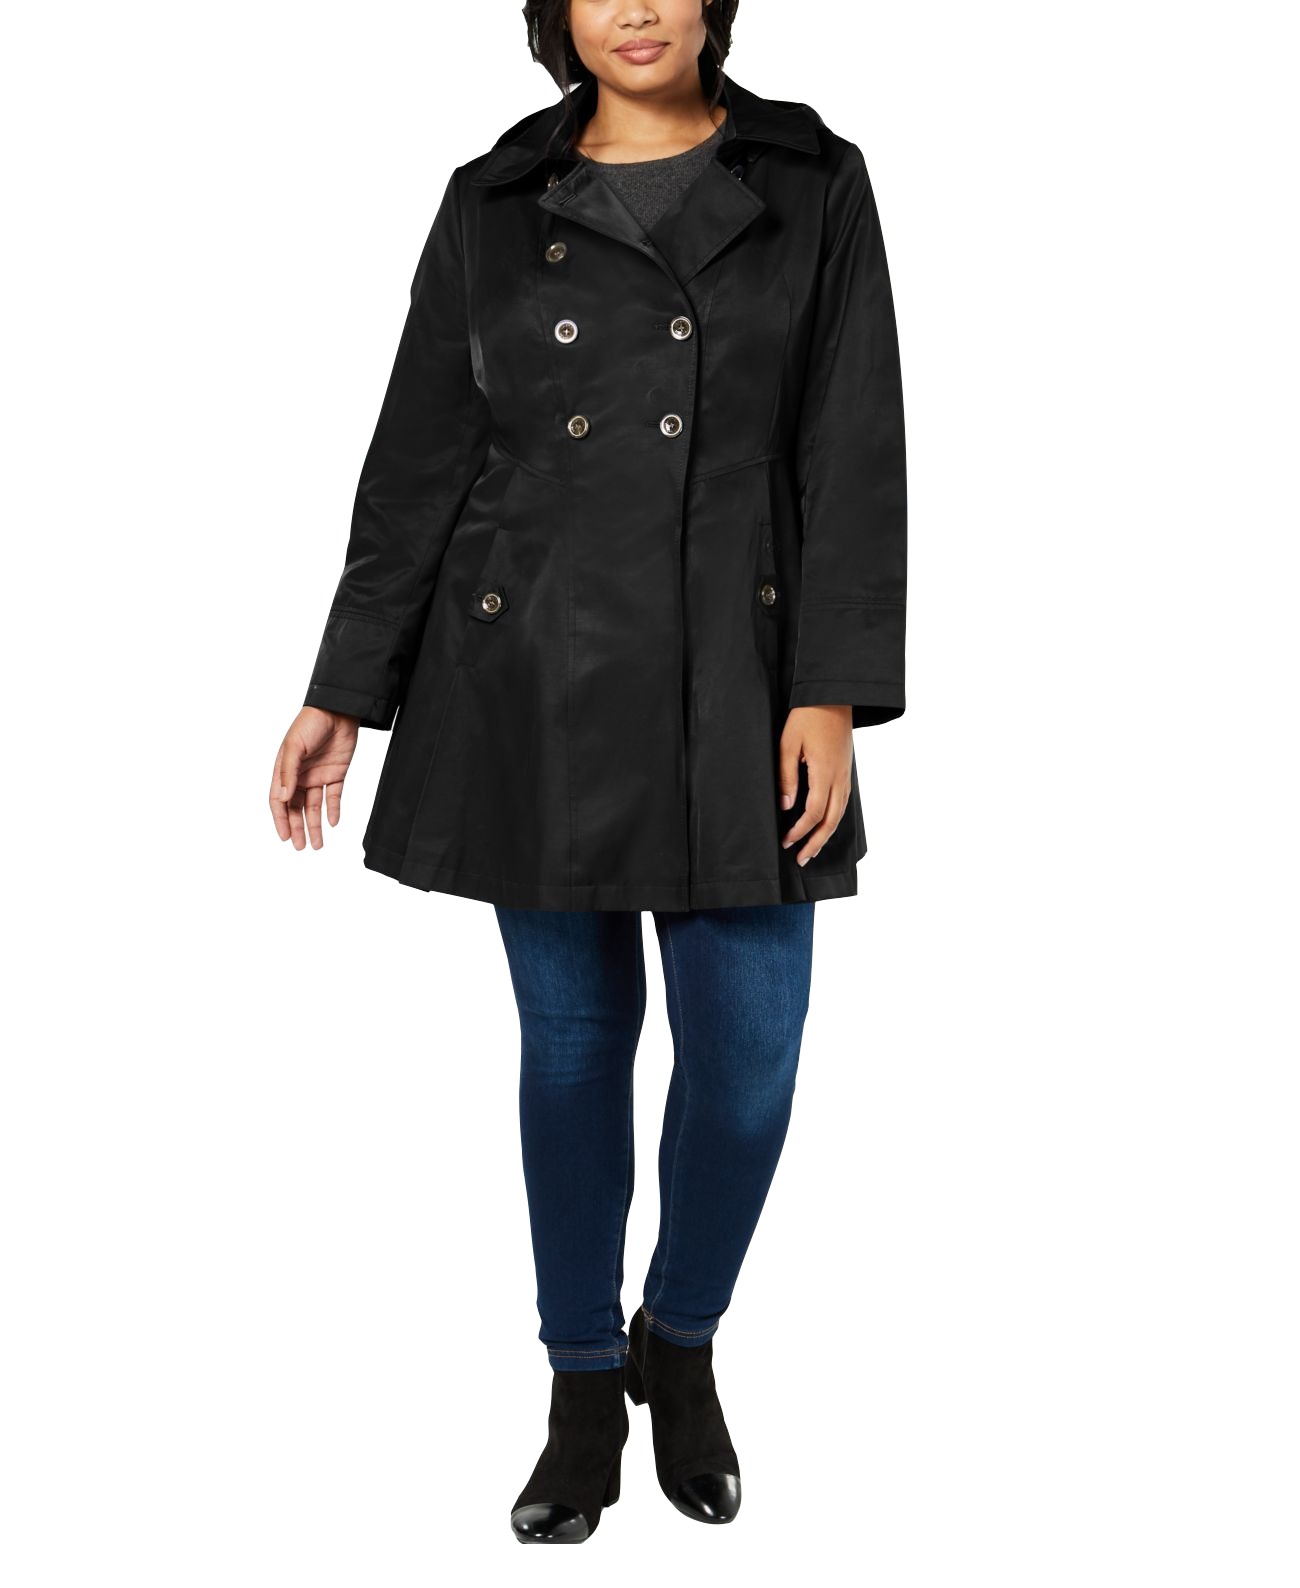 Via Spiga Women's Hooded Skirted Trench Coat Black Size 2X - image 1 of 3